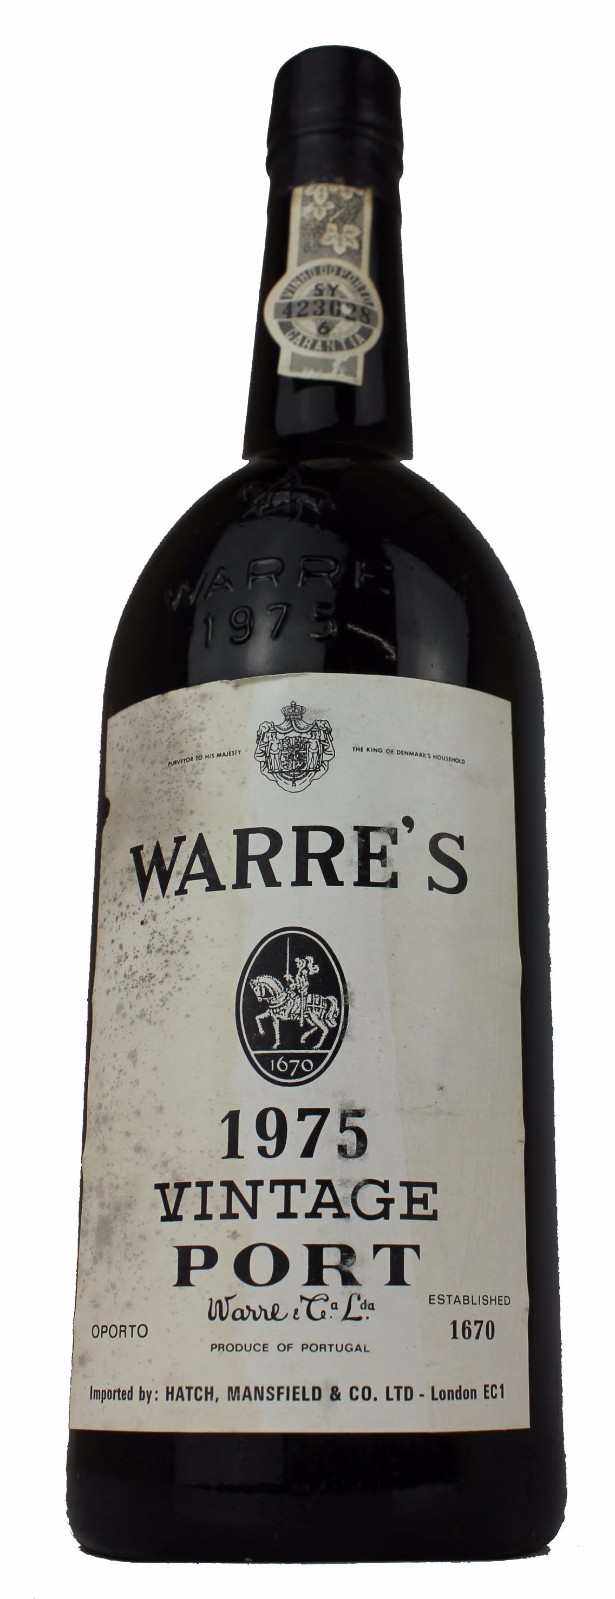 Warre's Vintage Port, Vintage Port, 1975 | Vintage Wine and Port